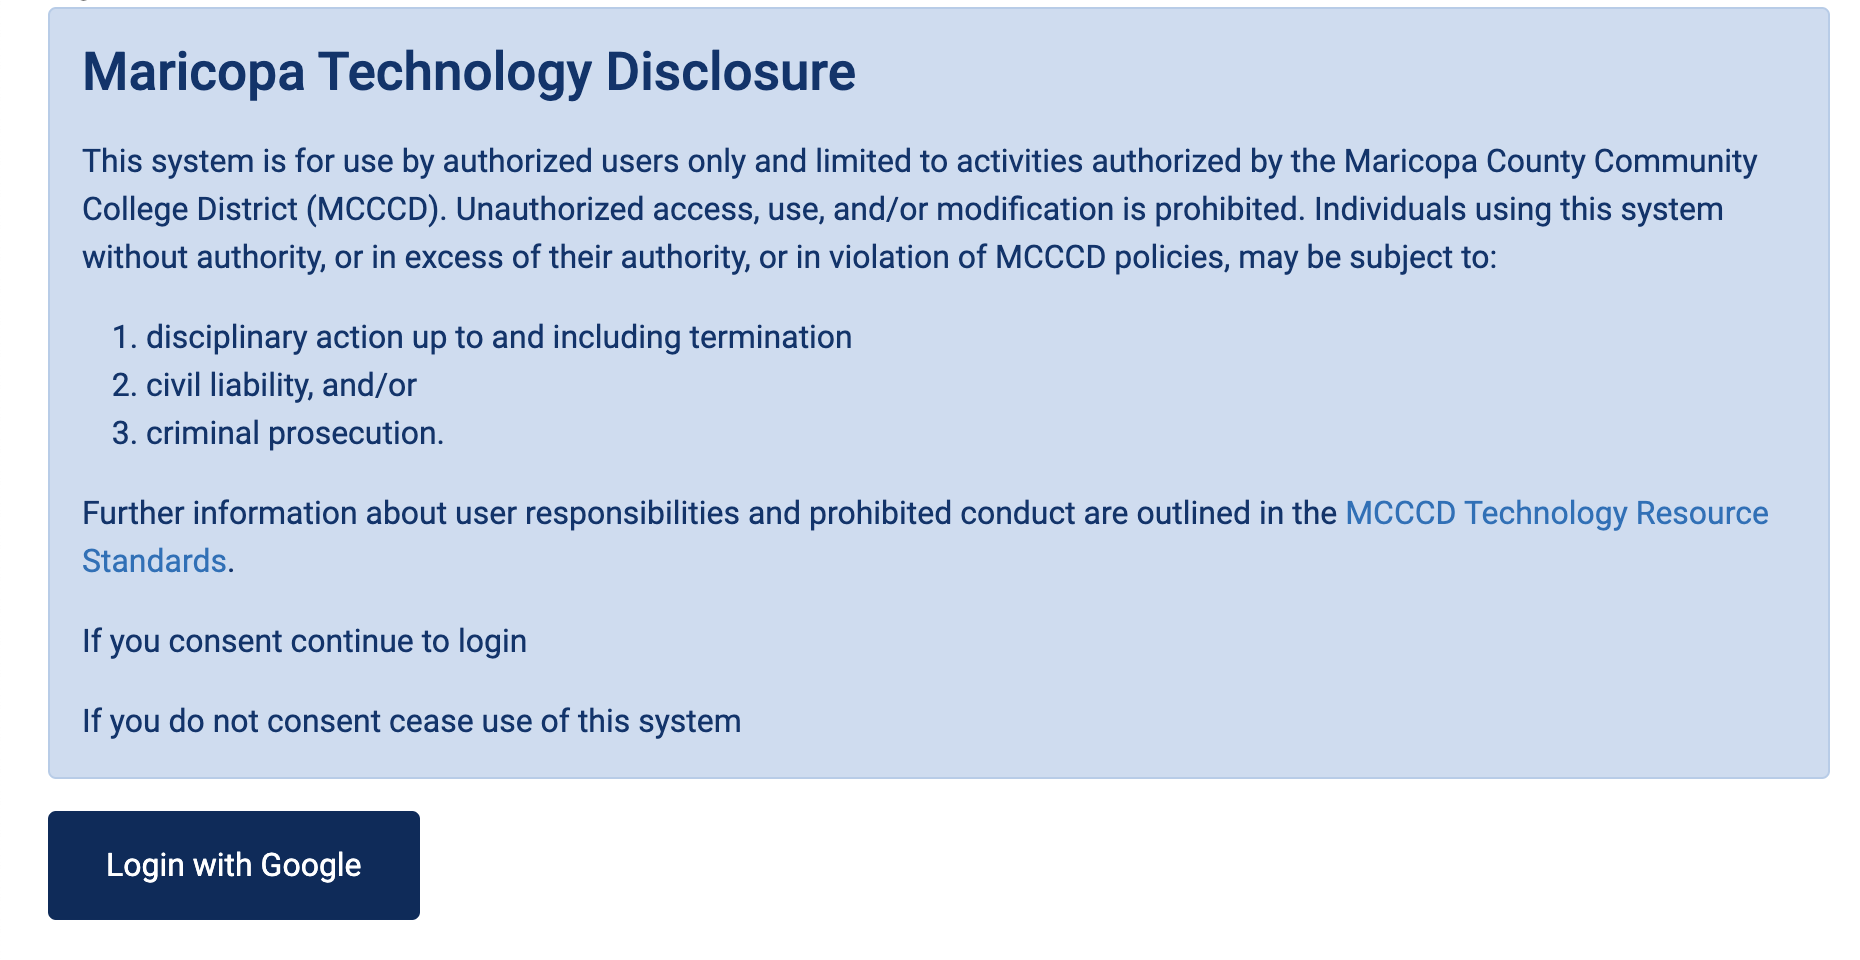 MCCCD Technology Disclosure Acknowledgement